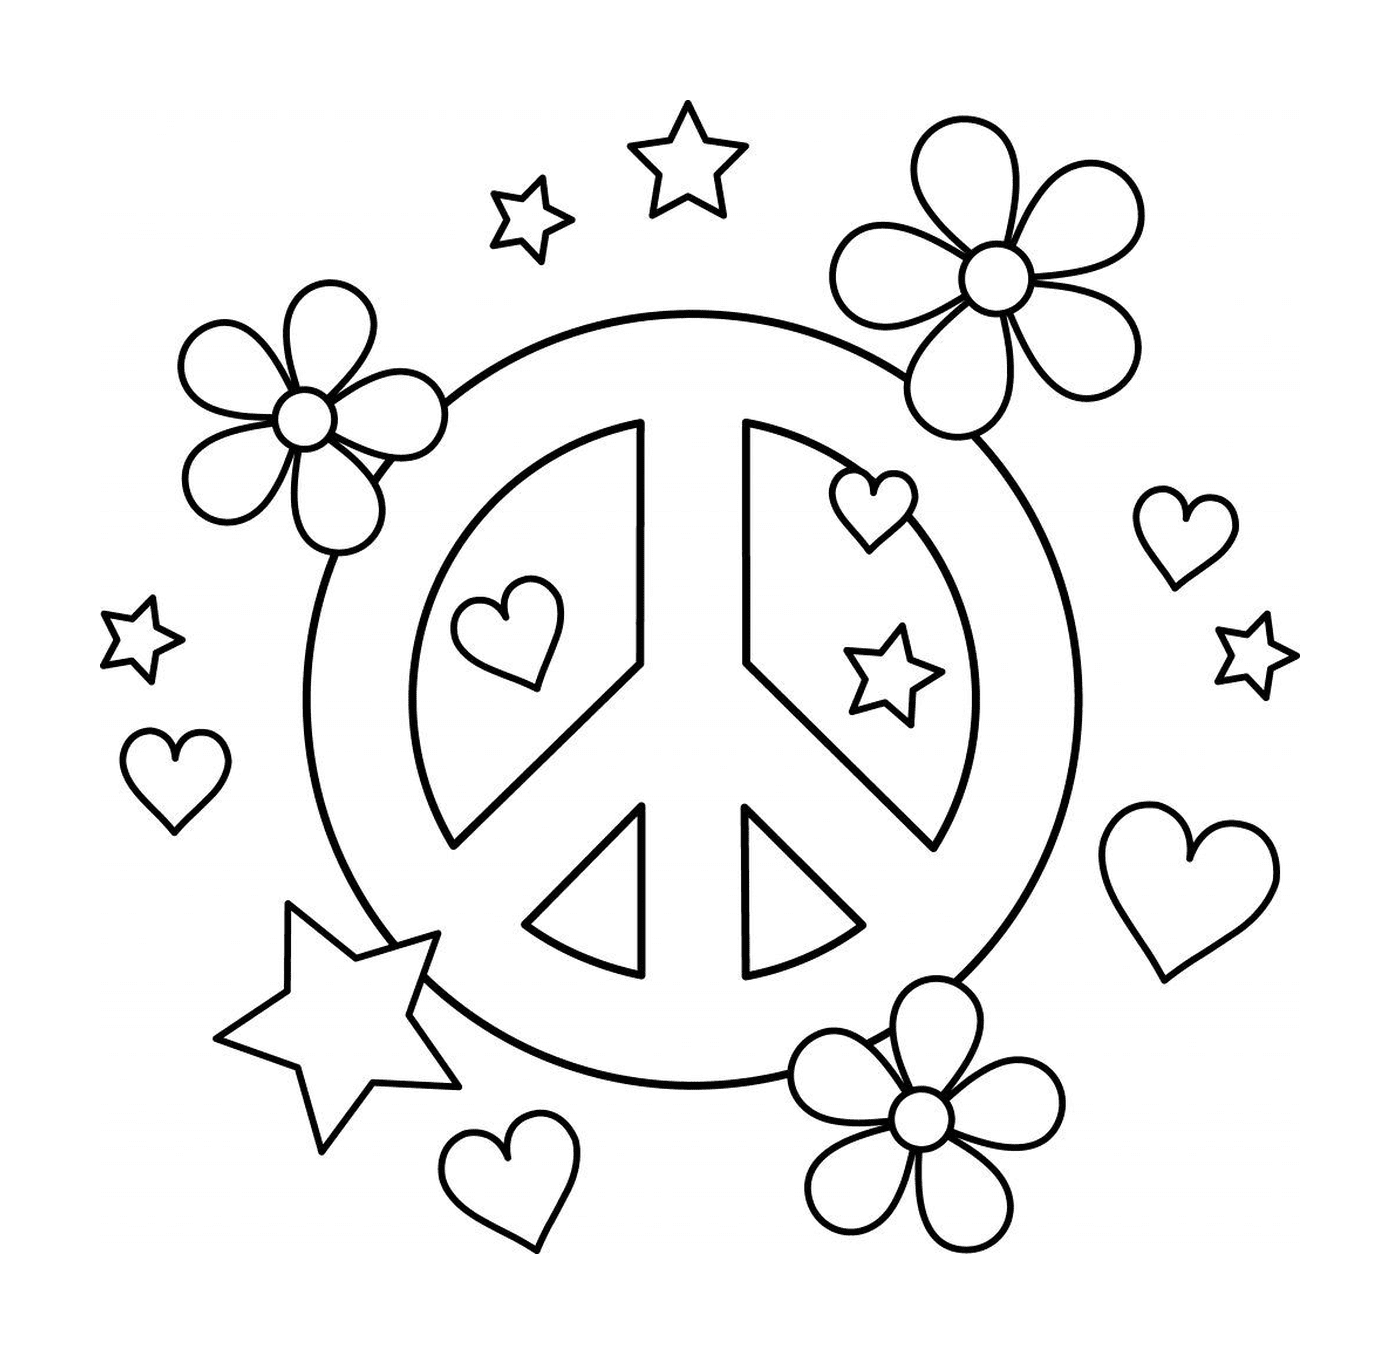  Символ мира с сердцами и цветами 